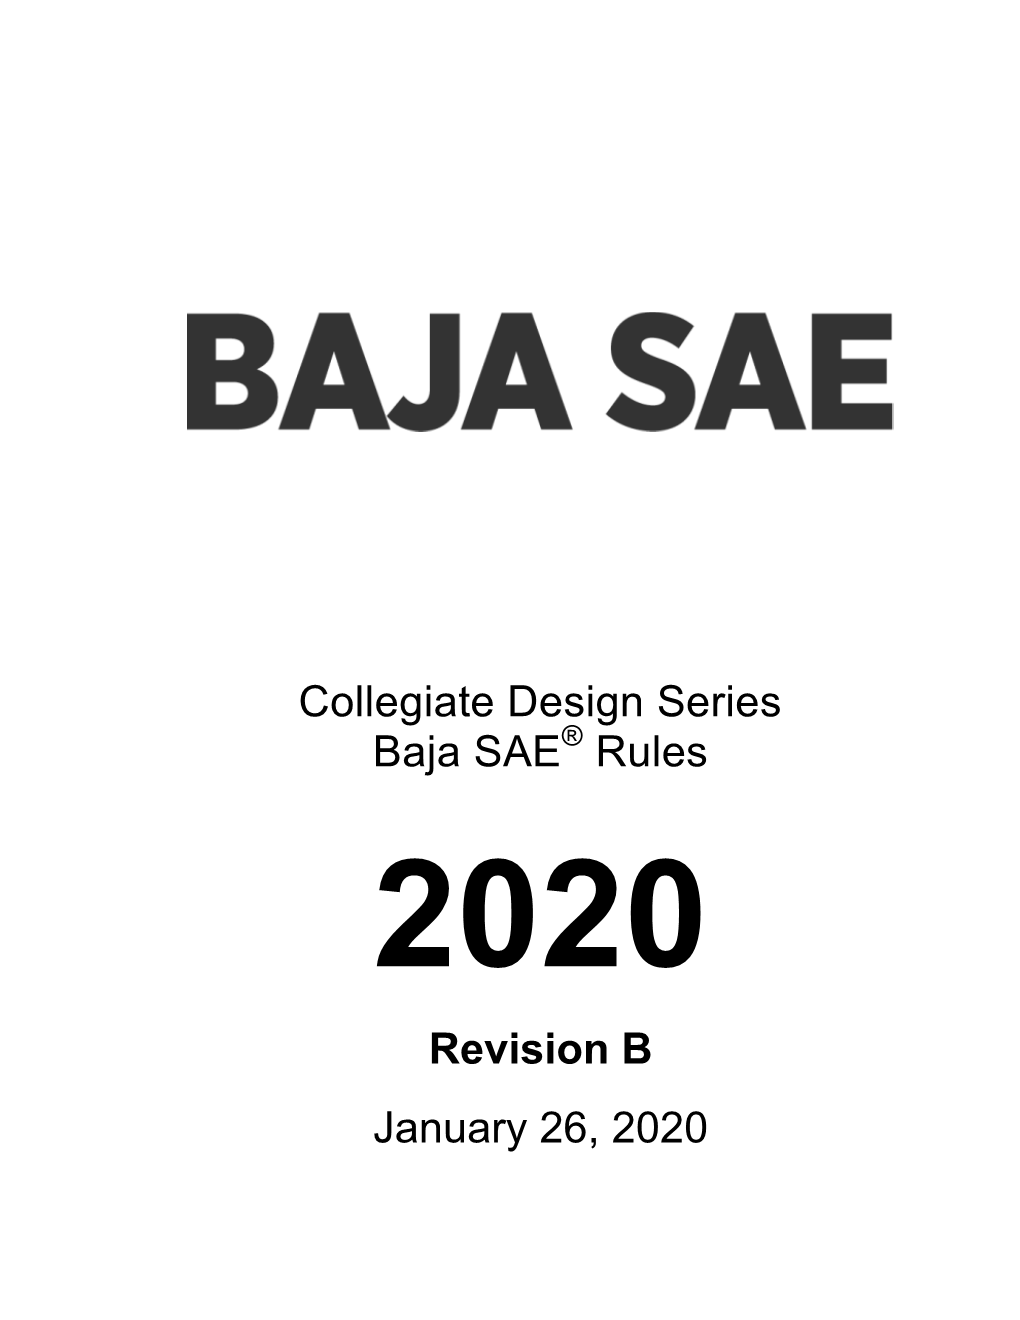 Collegiate Design Series Baja SAE Rules Revision B January 26, 2020